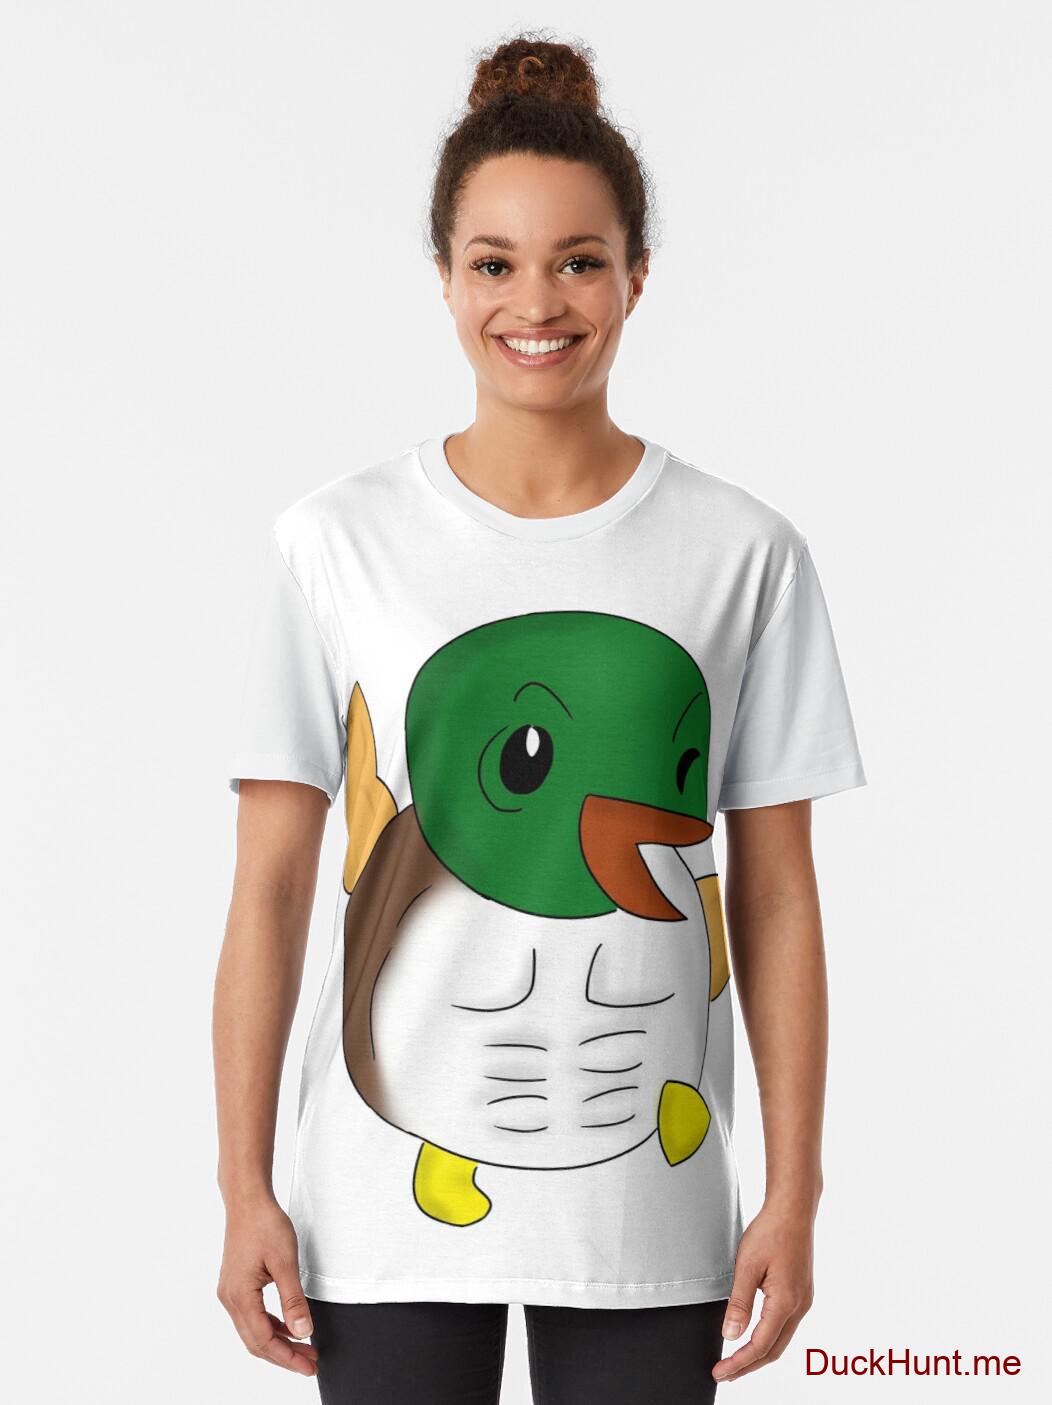 Super duck White Graphic T-Shirt alternative image 1